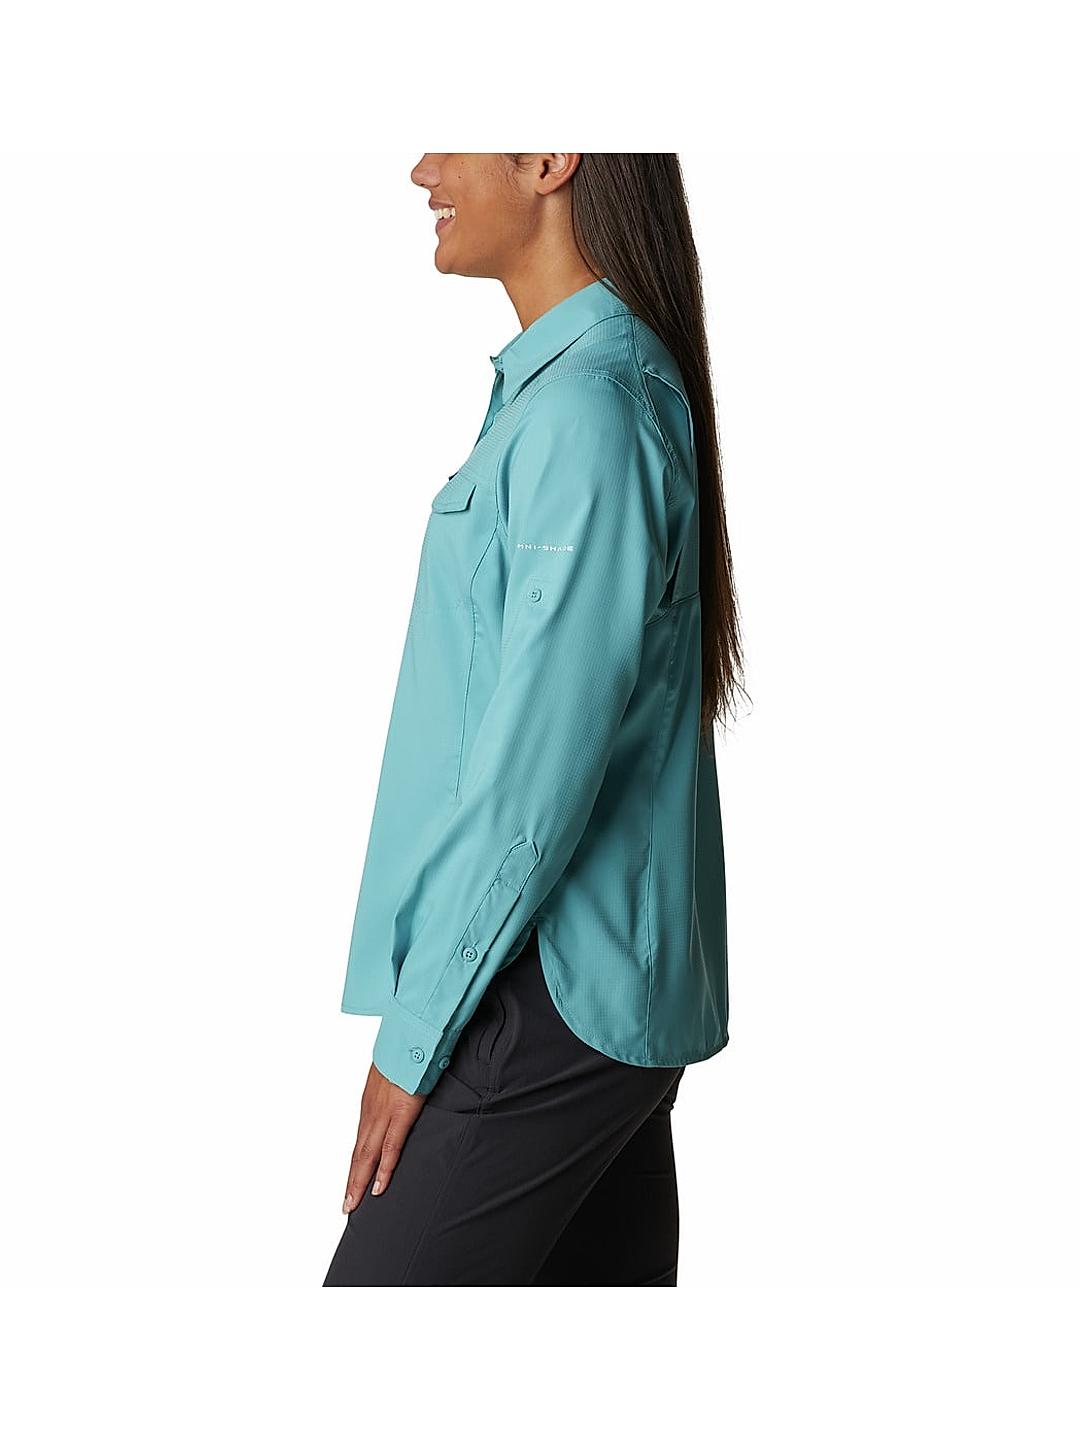 Buy Green Silver Ridge Lite Long Sleeve Shirt for Women Online at